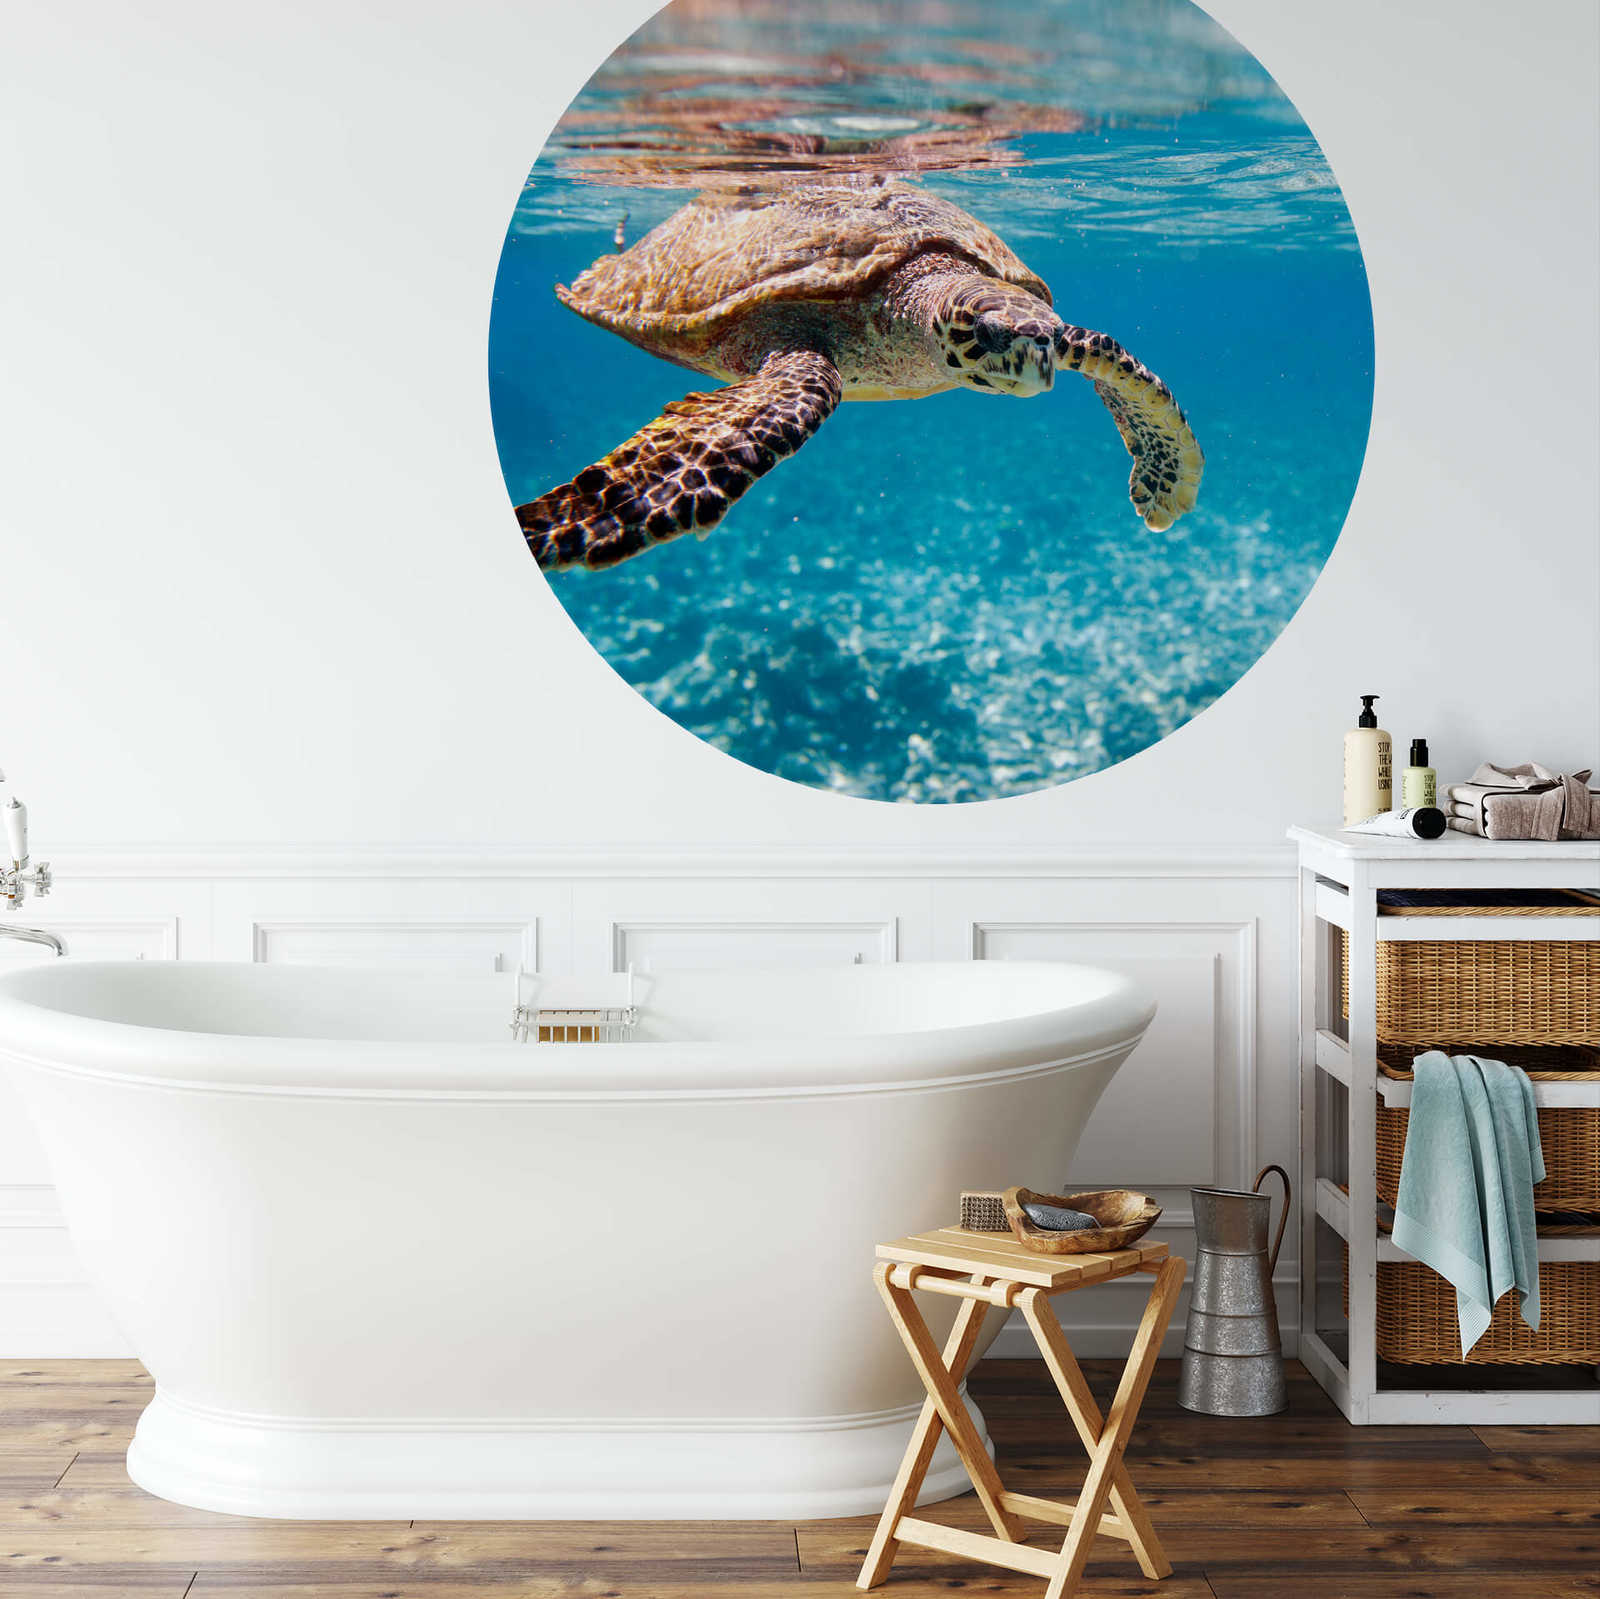             Mural redondo de tortuga bajo el agua
        